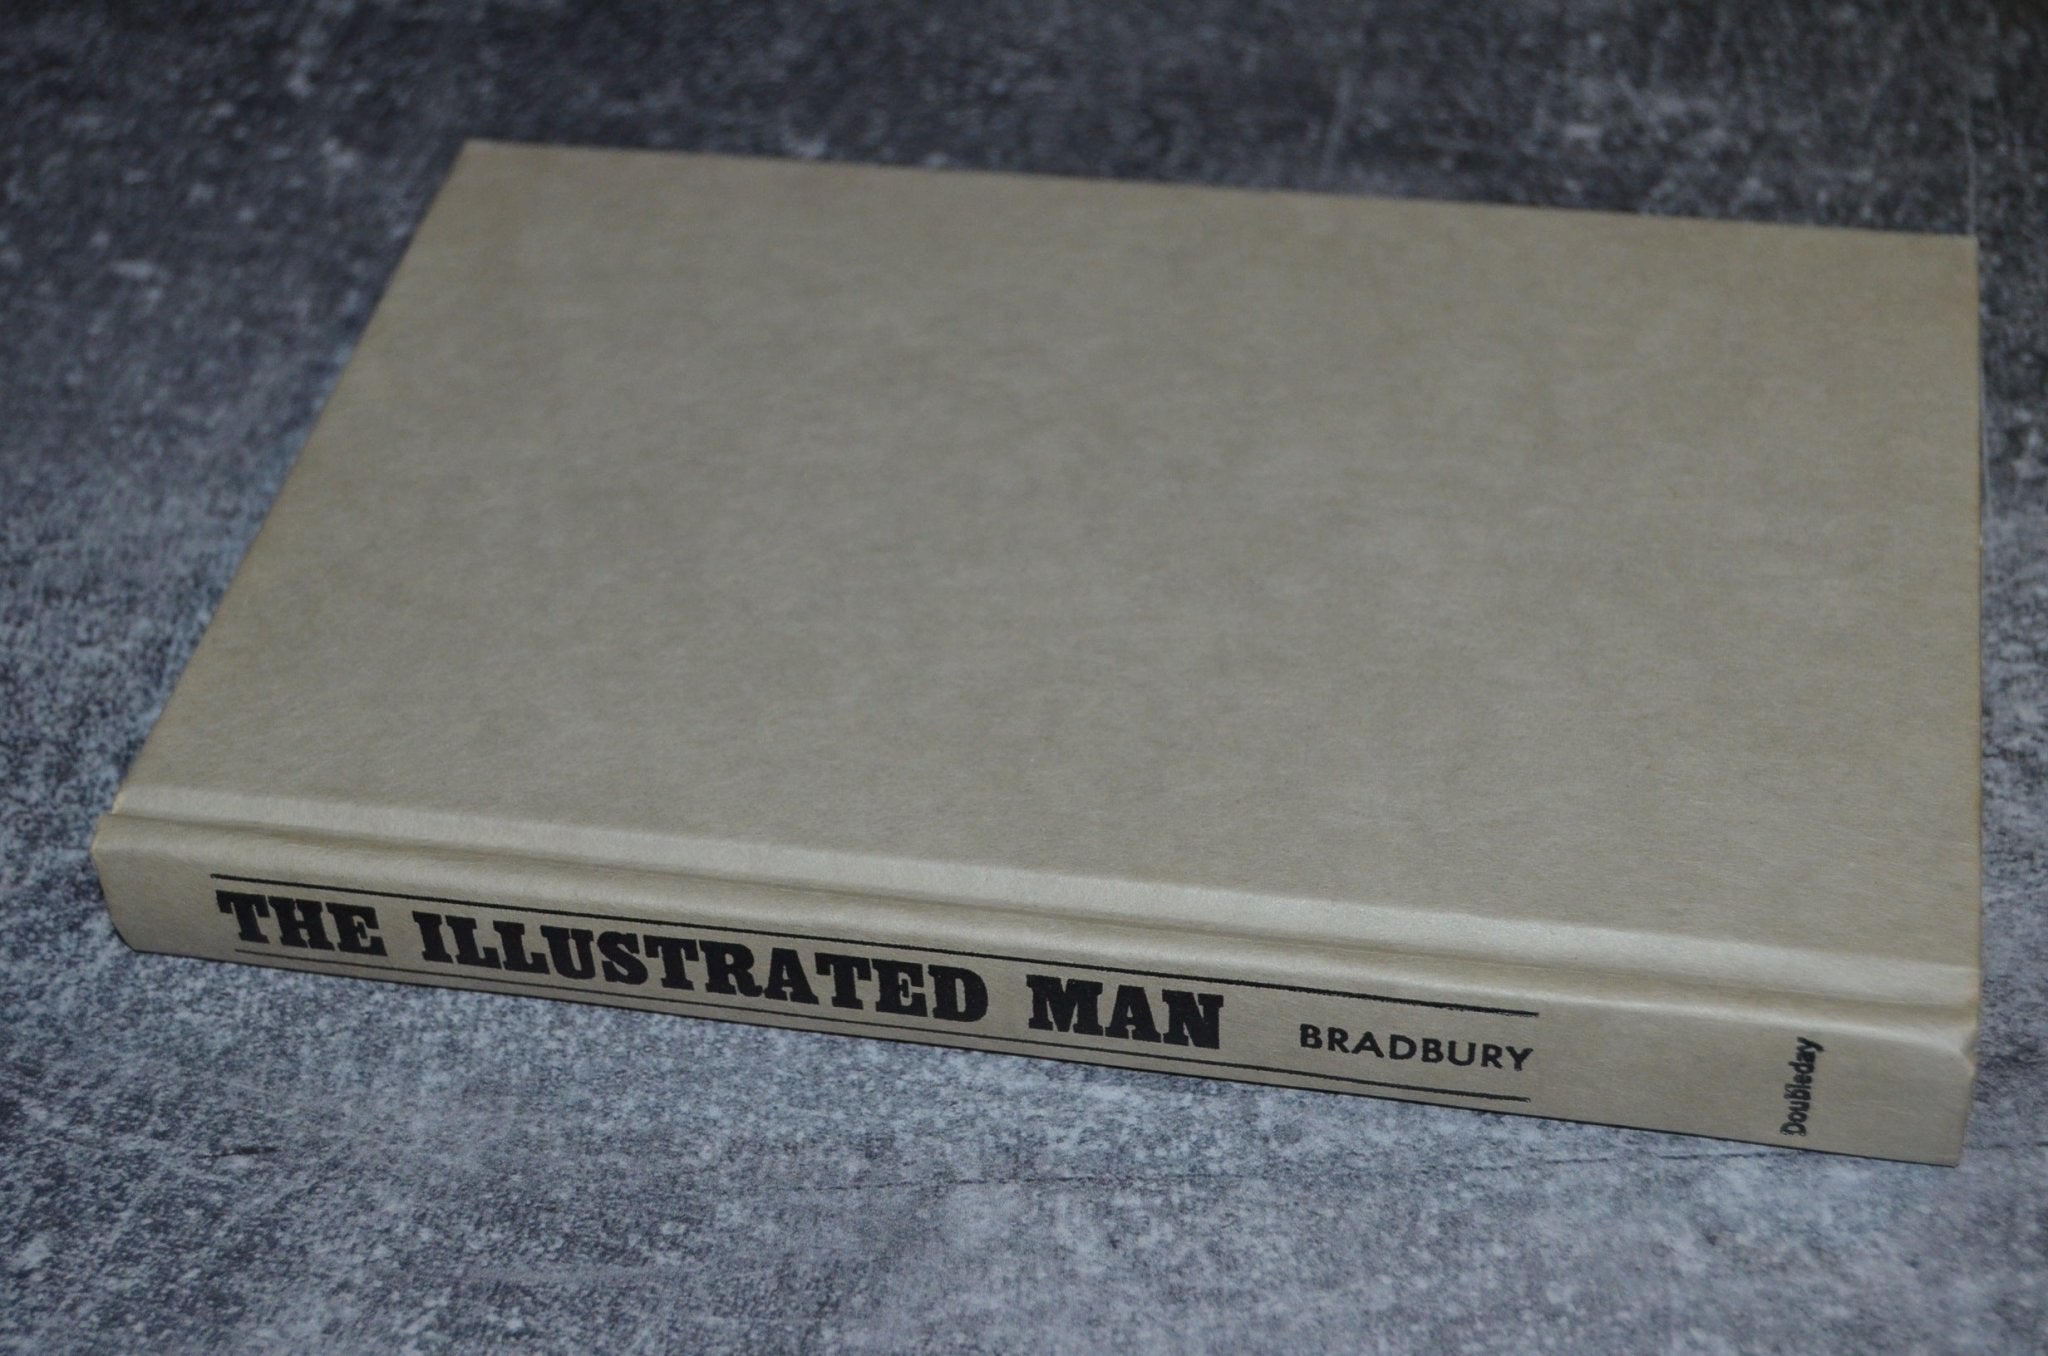 Vintage Book Club Edition The Illustrated Man by Ray Bradbury 1951 - Brookfield Books